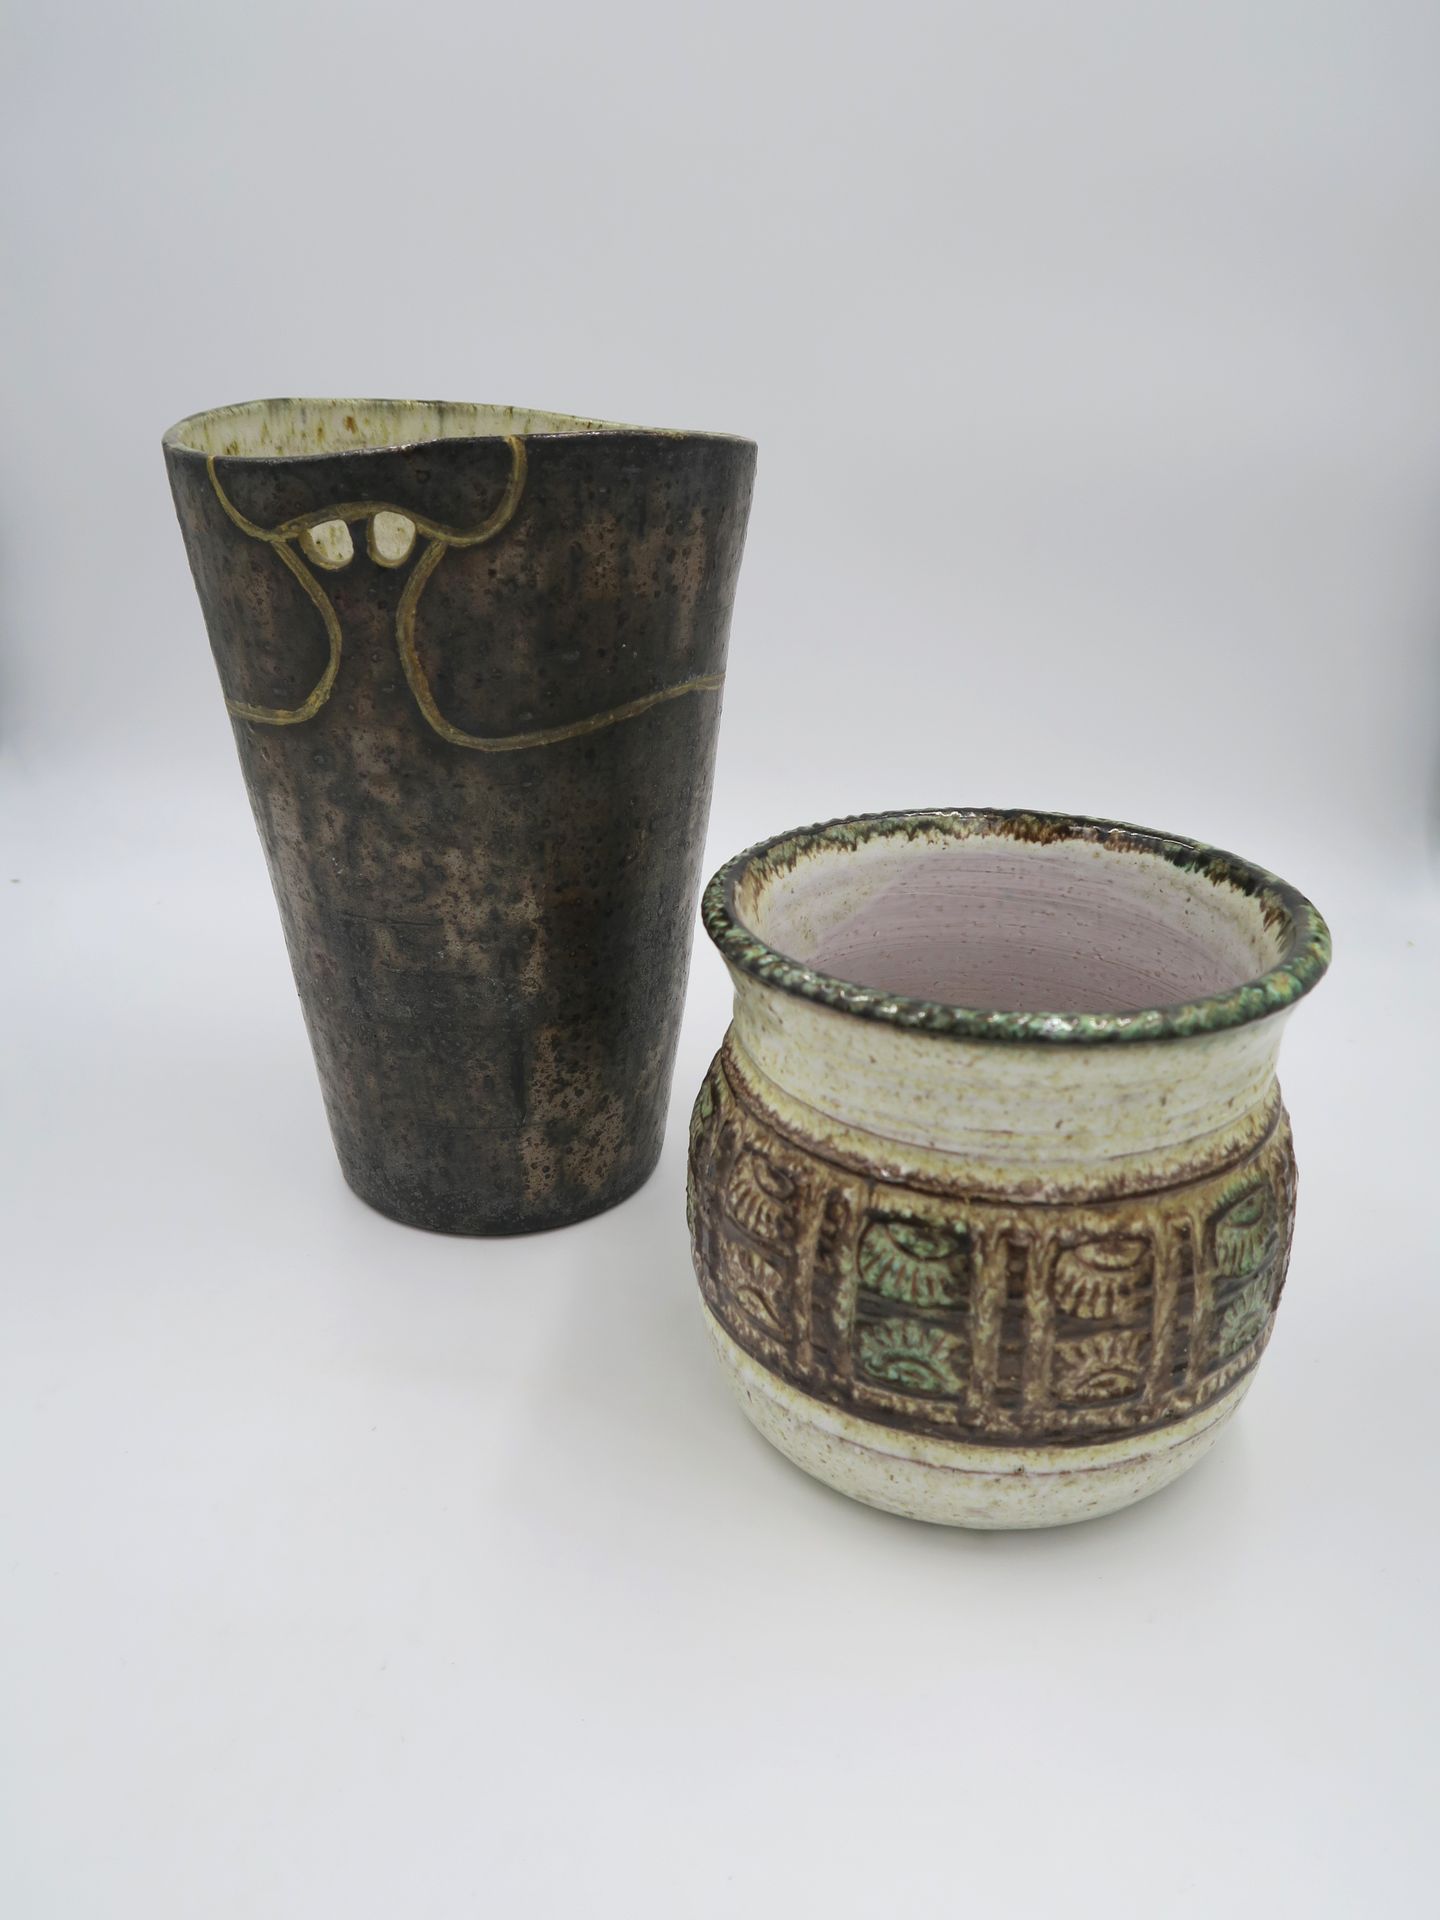 Null 瓦劳里的吉罗德

米色棕绿色釉面陶瓷壶，颈部呈喇叭状

签名

H.11厘米

还有一个外翻的金属化陶瓷花瓶，署名 "Jean-Pierre Weih&hellip;